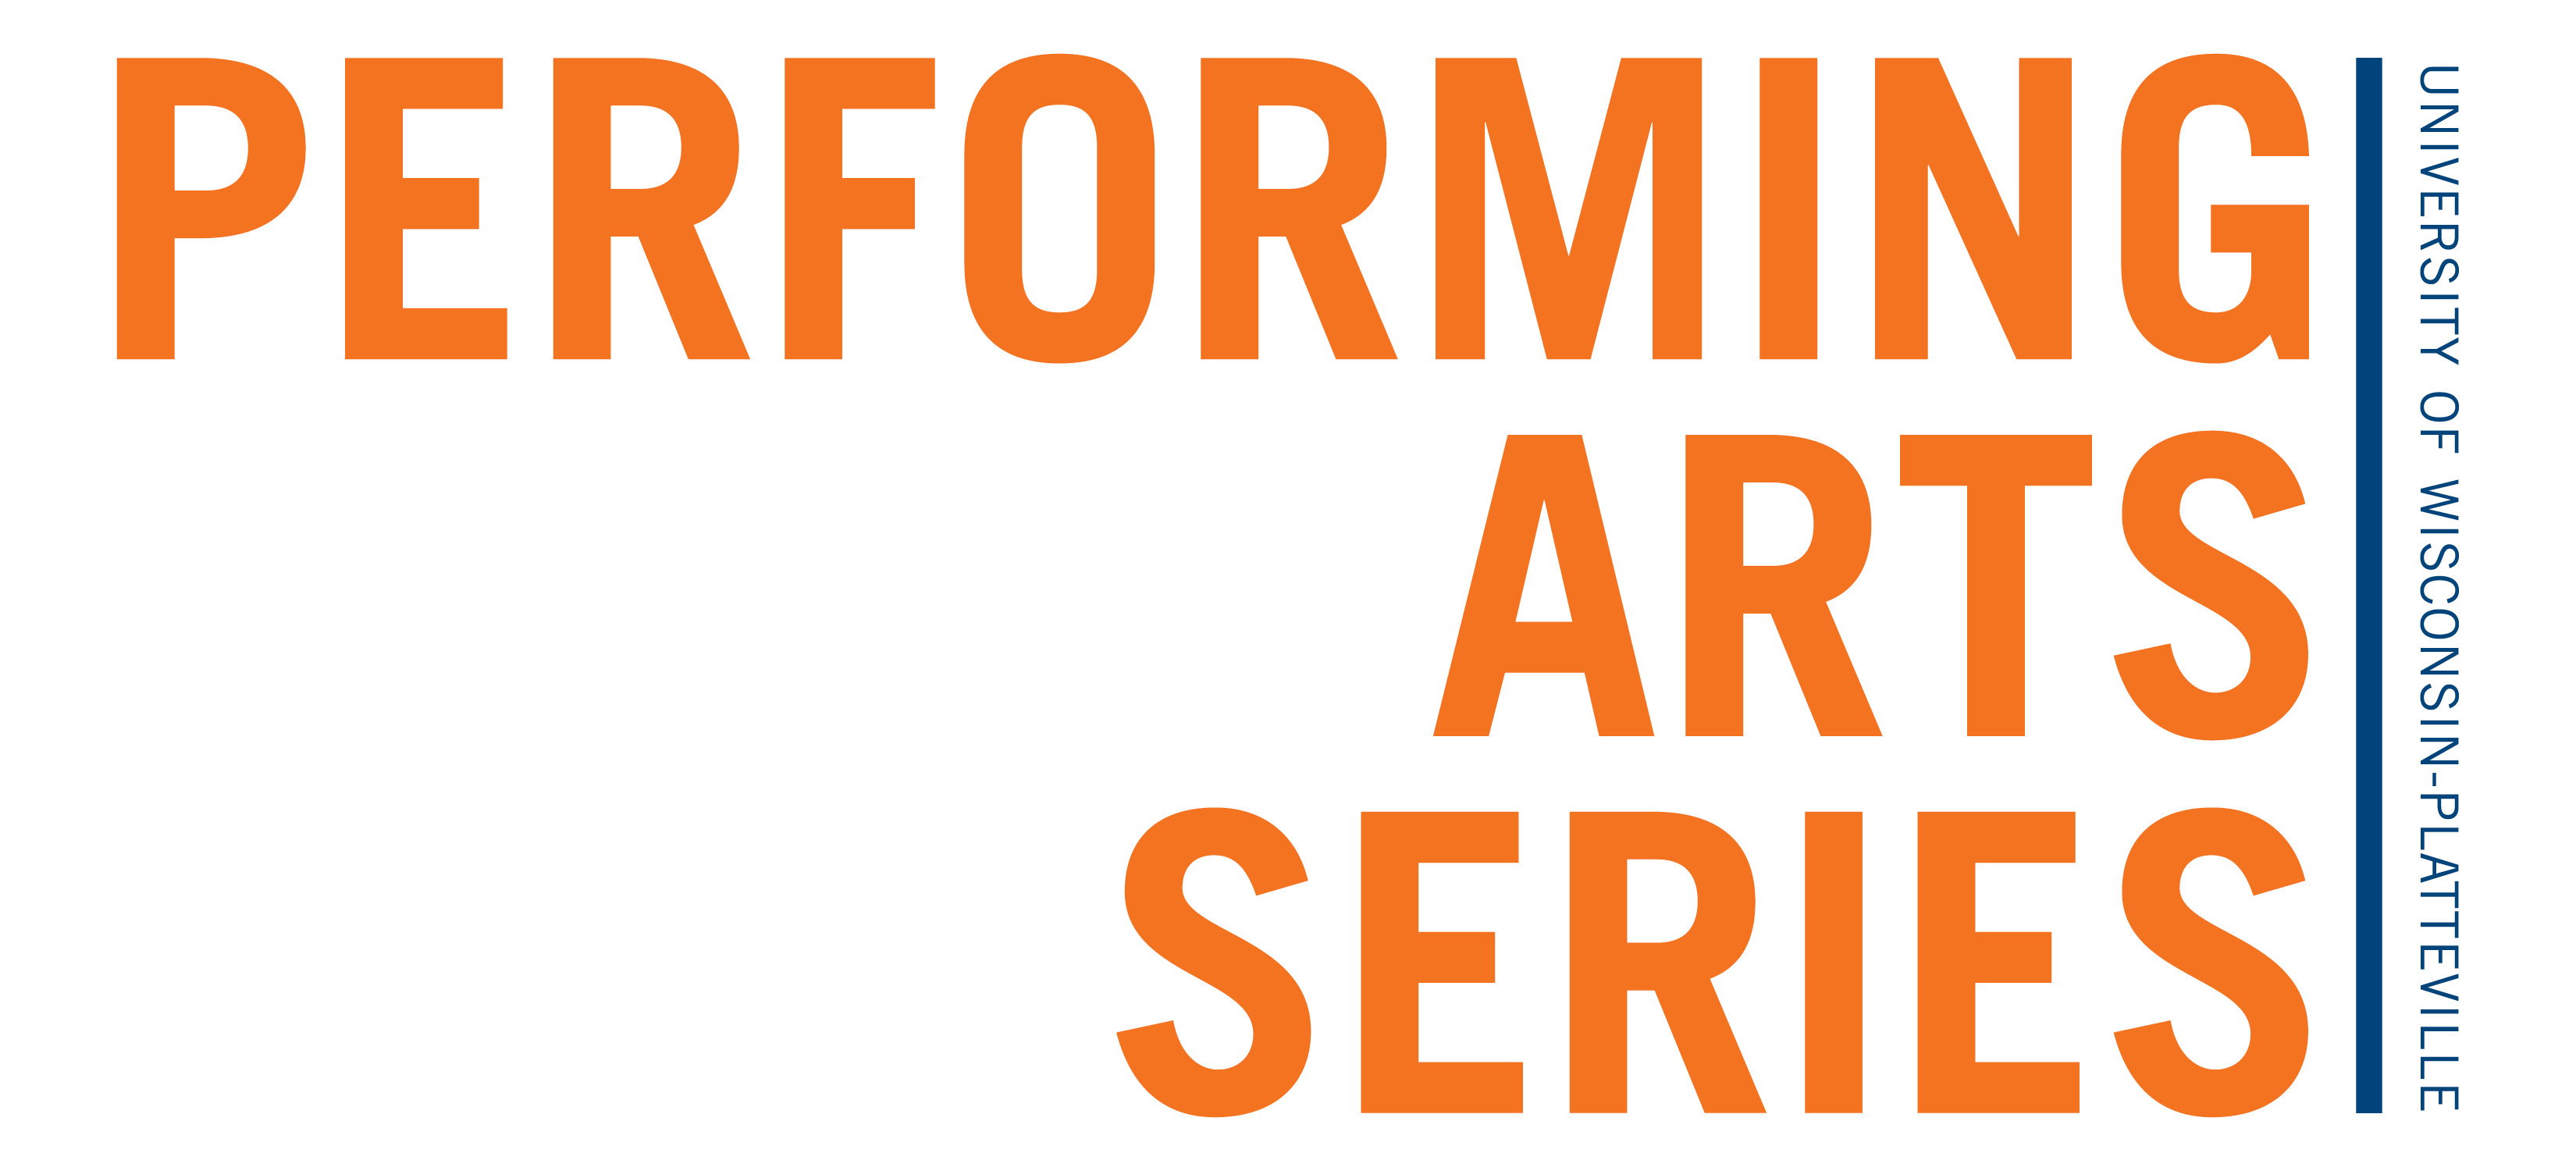 Performing Arts Series logo